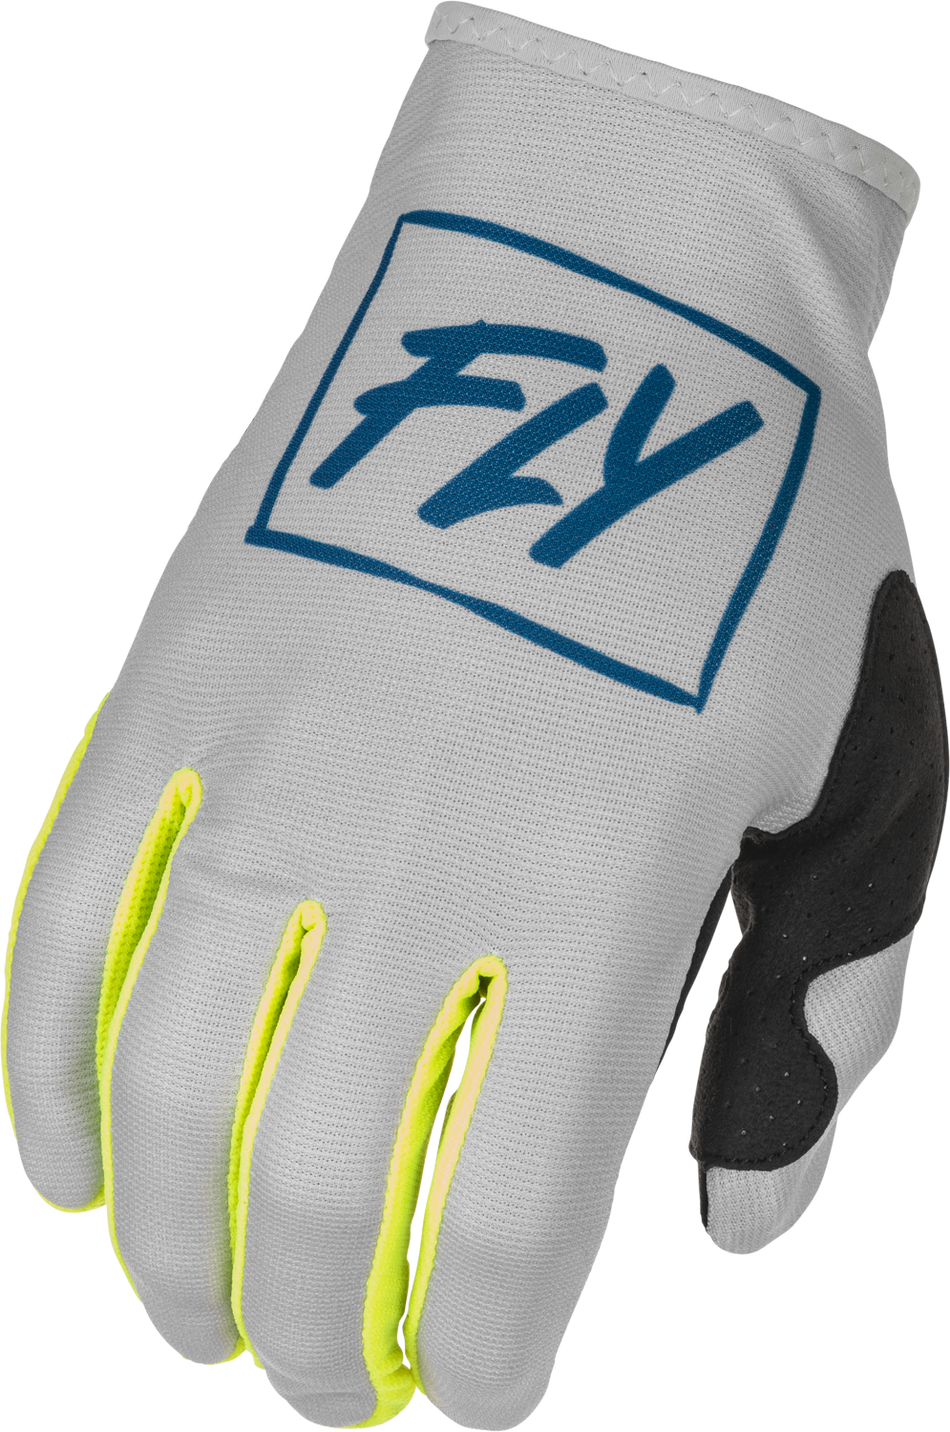 FLY RACING Youth Lite Gloves Grey/Teal/Hi-Vis Yl 375-711YL